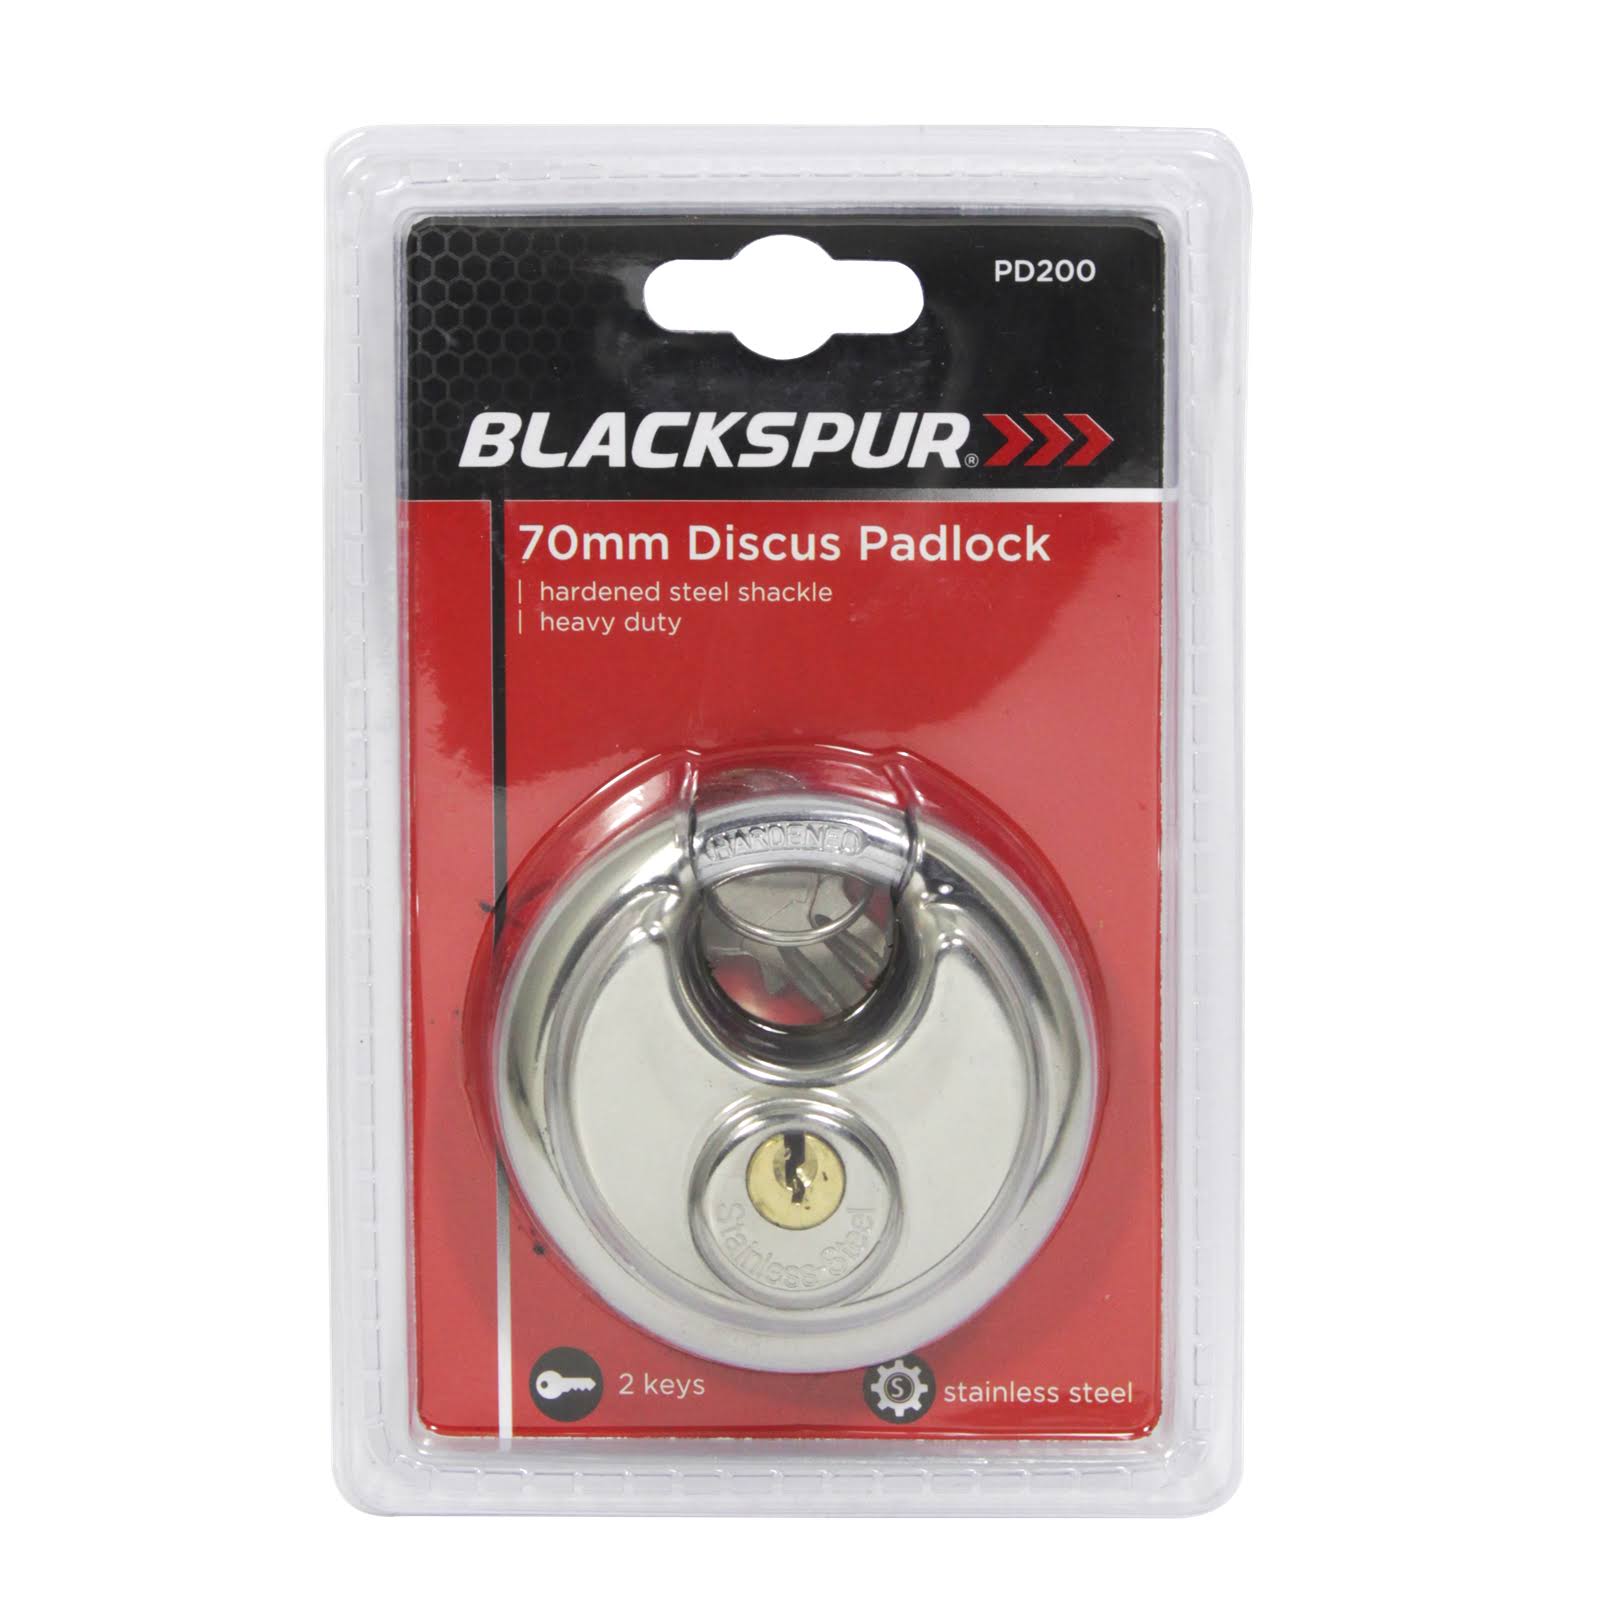 Blackspur Discus Padlock - 70mm